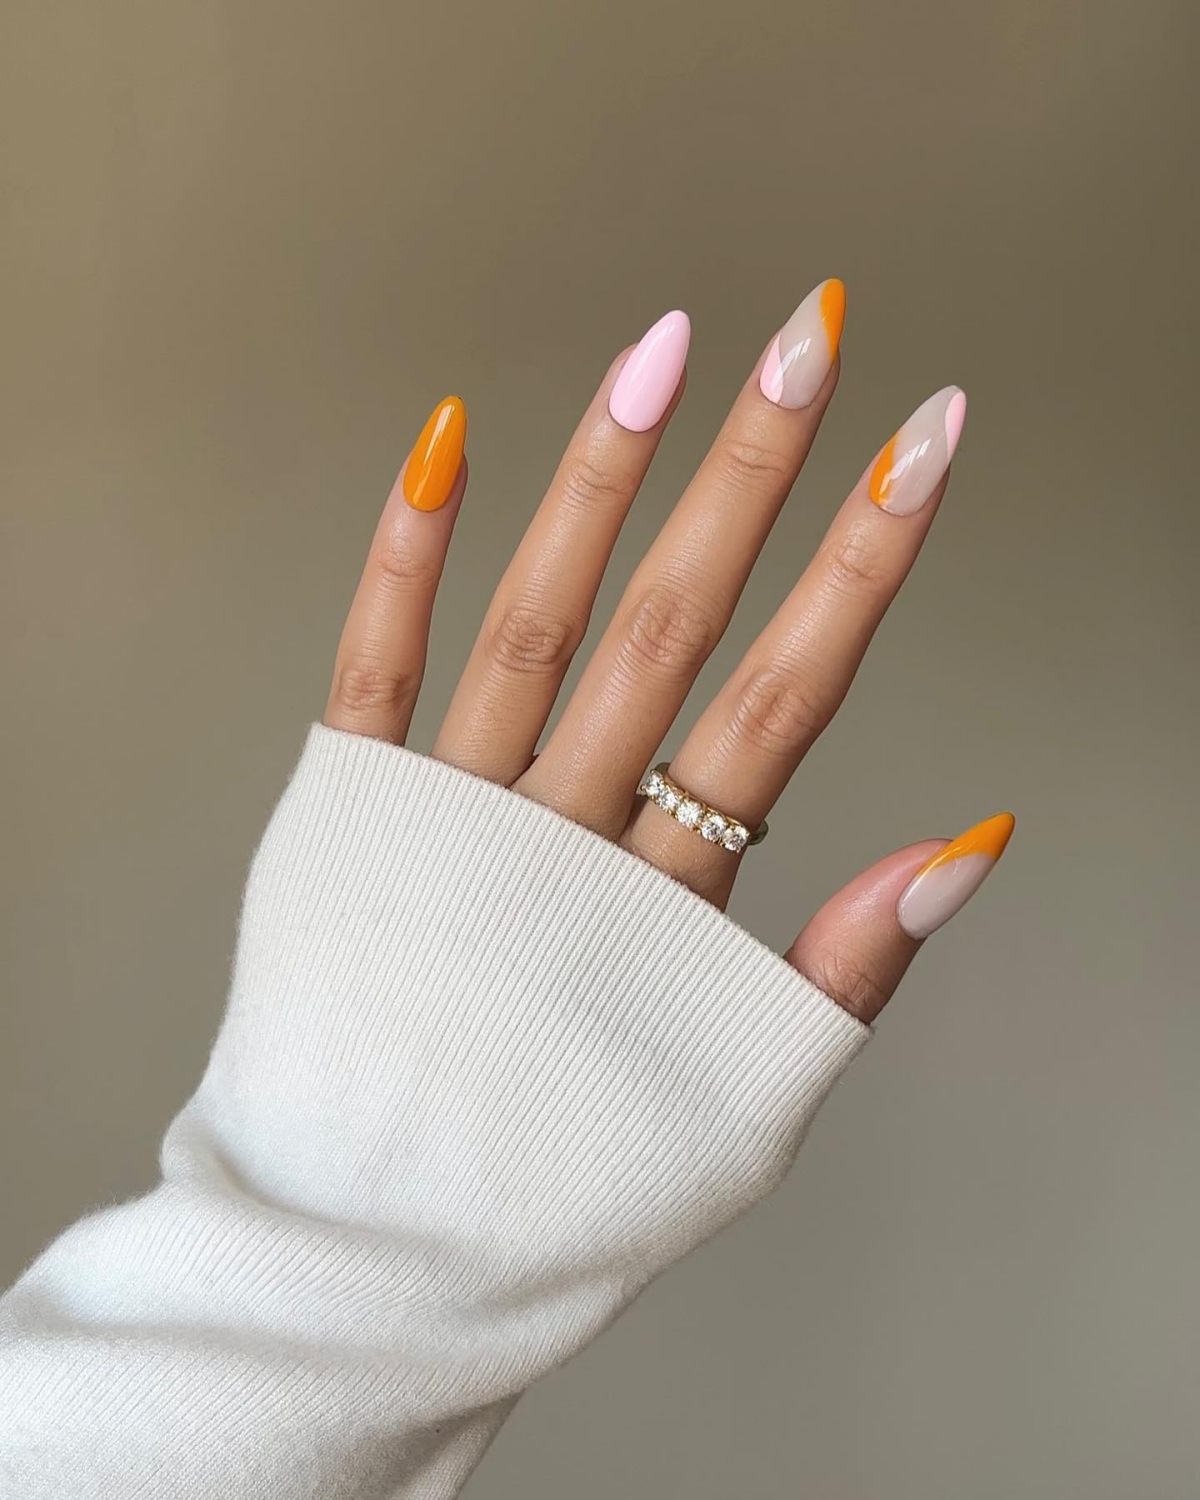 orange and pink nails